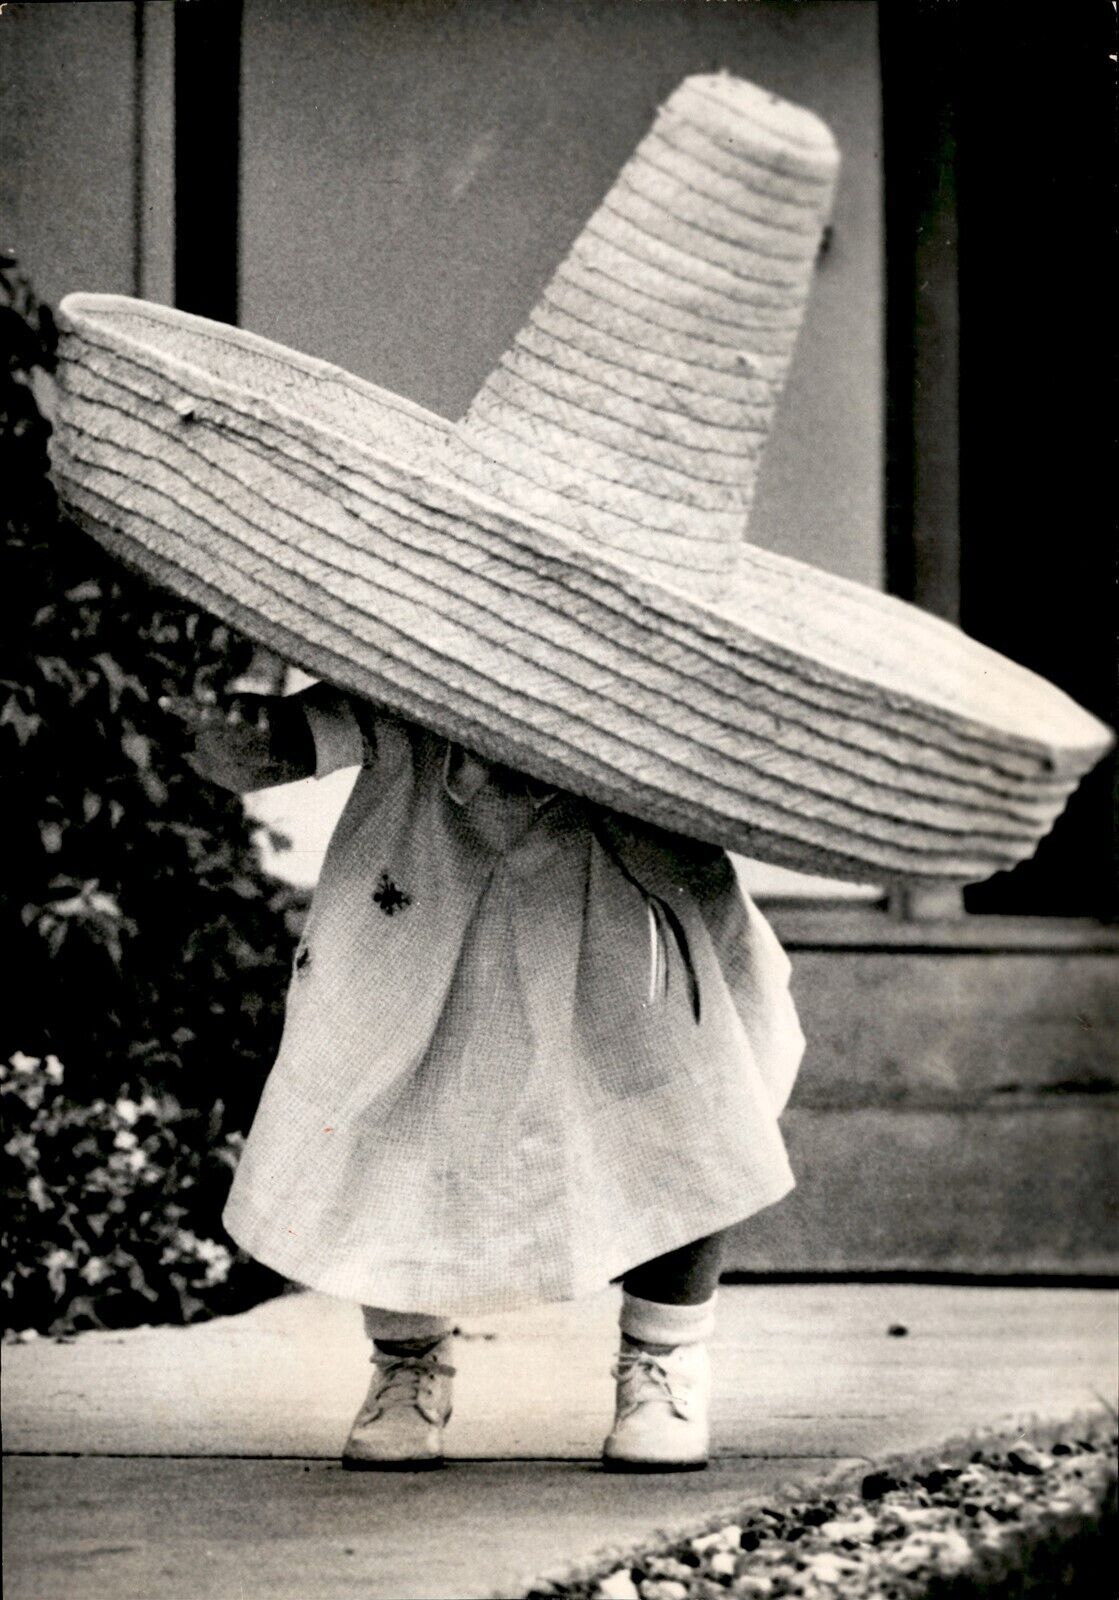 LG47 1969 Original UPI Photo LITTLE GIRL LOST IN GIANT SOMBRERO STRAW HAT